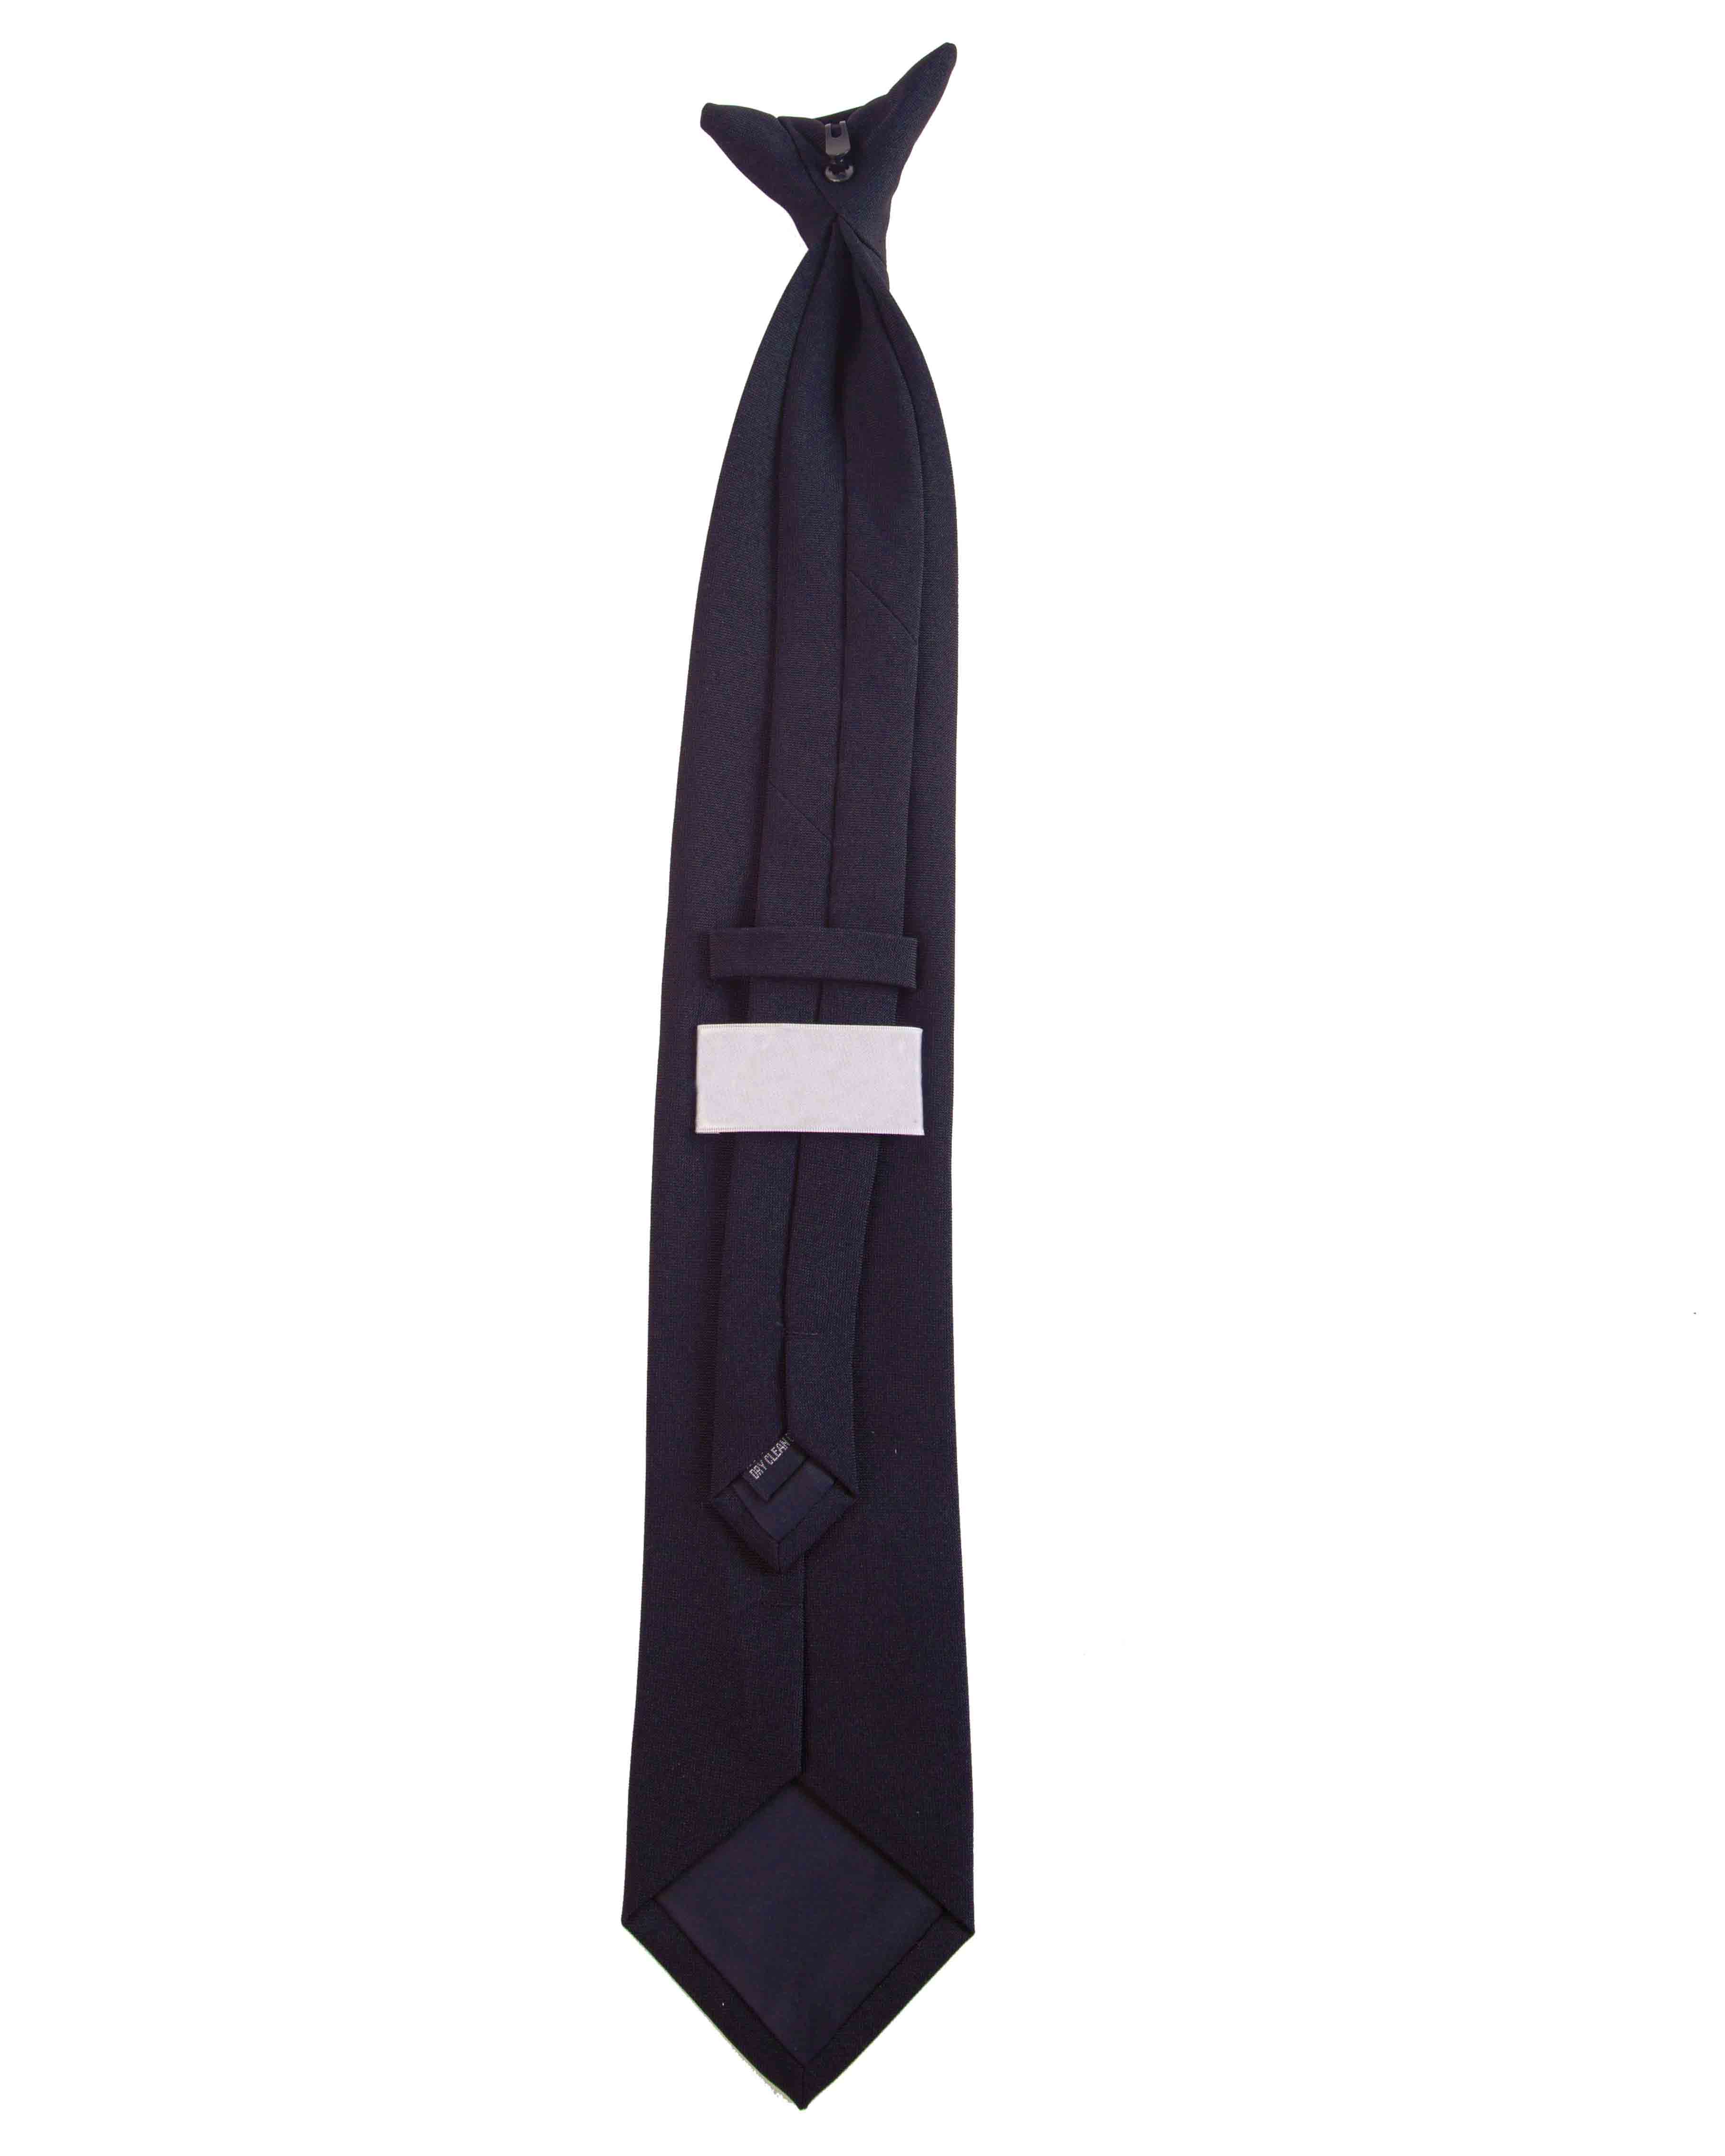 Clip On Navy Tie